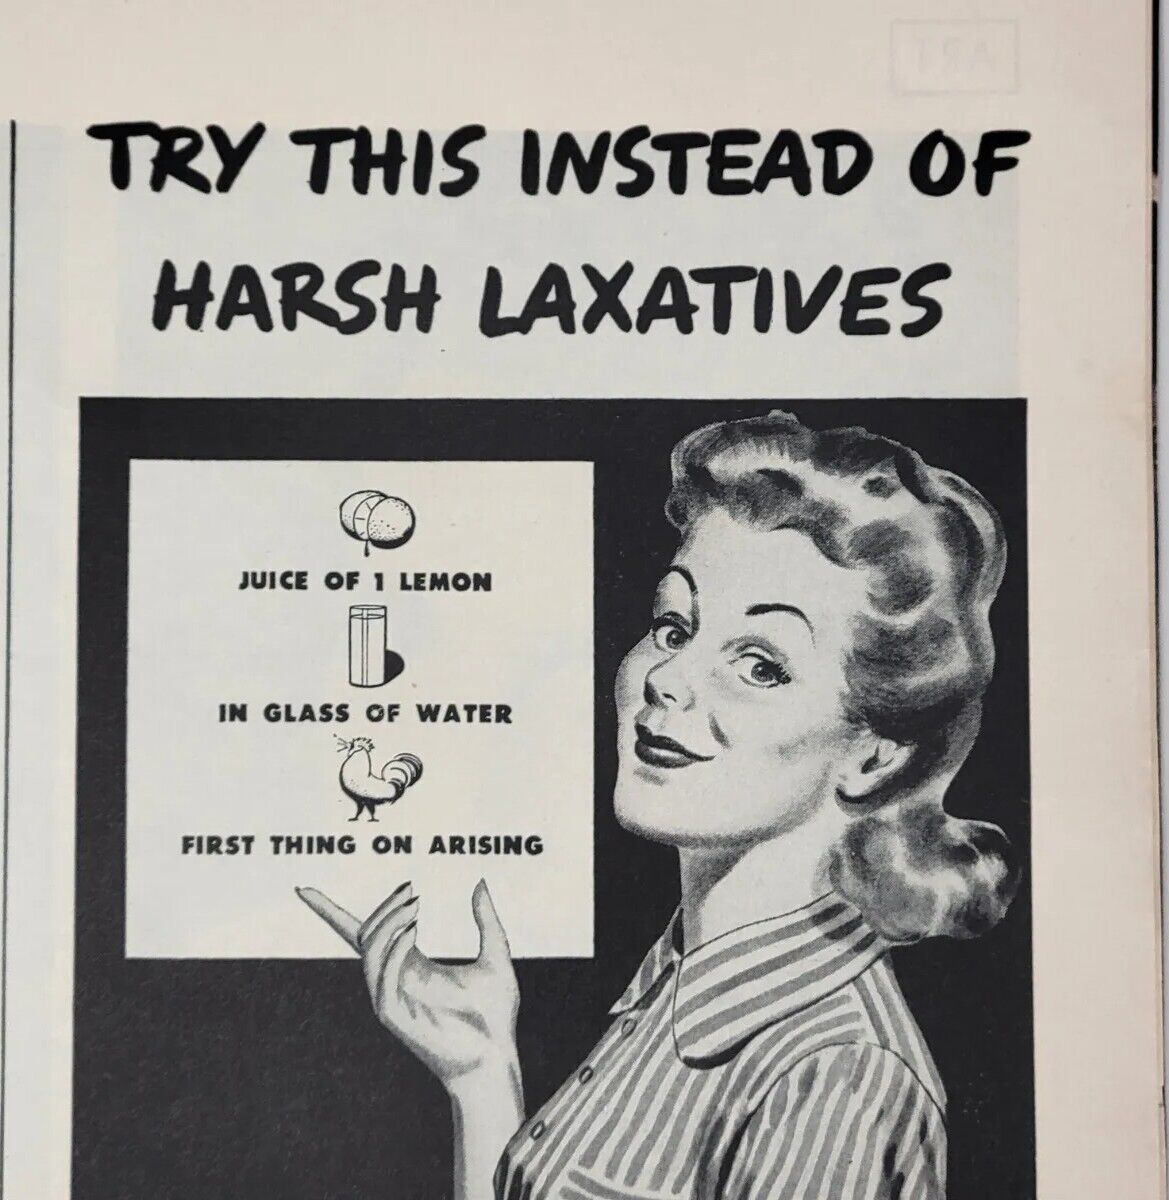 1944 California Sunkist Lemon Water Avoid Harsh Laxatives Vintage Print Ad